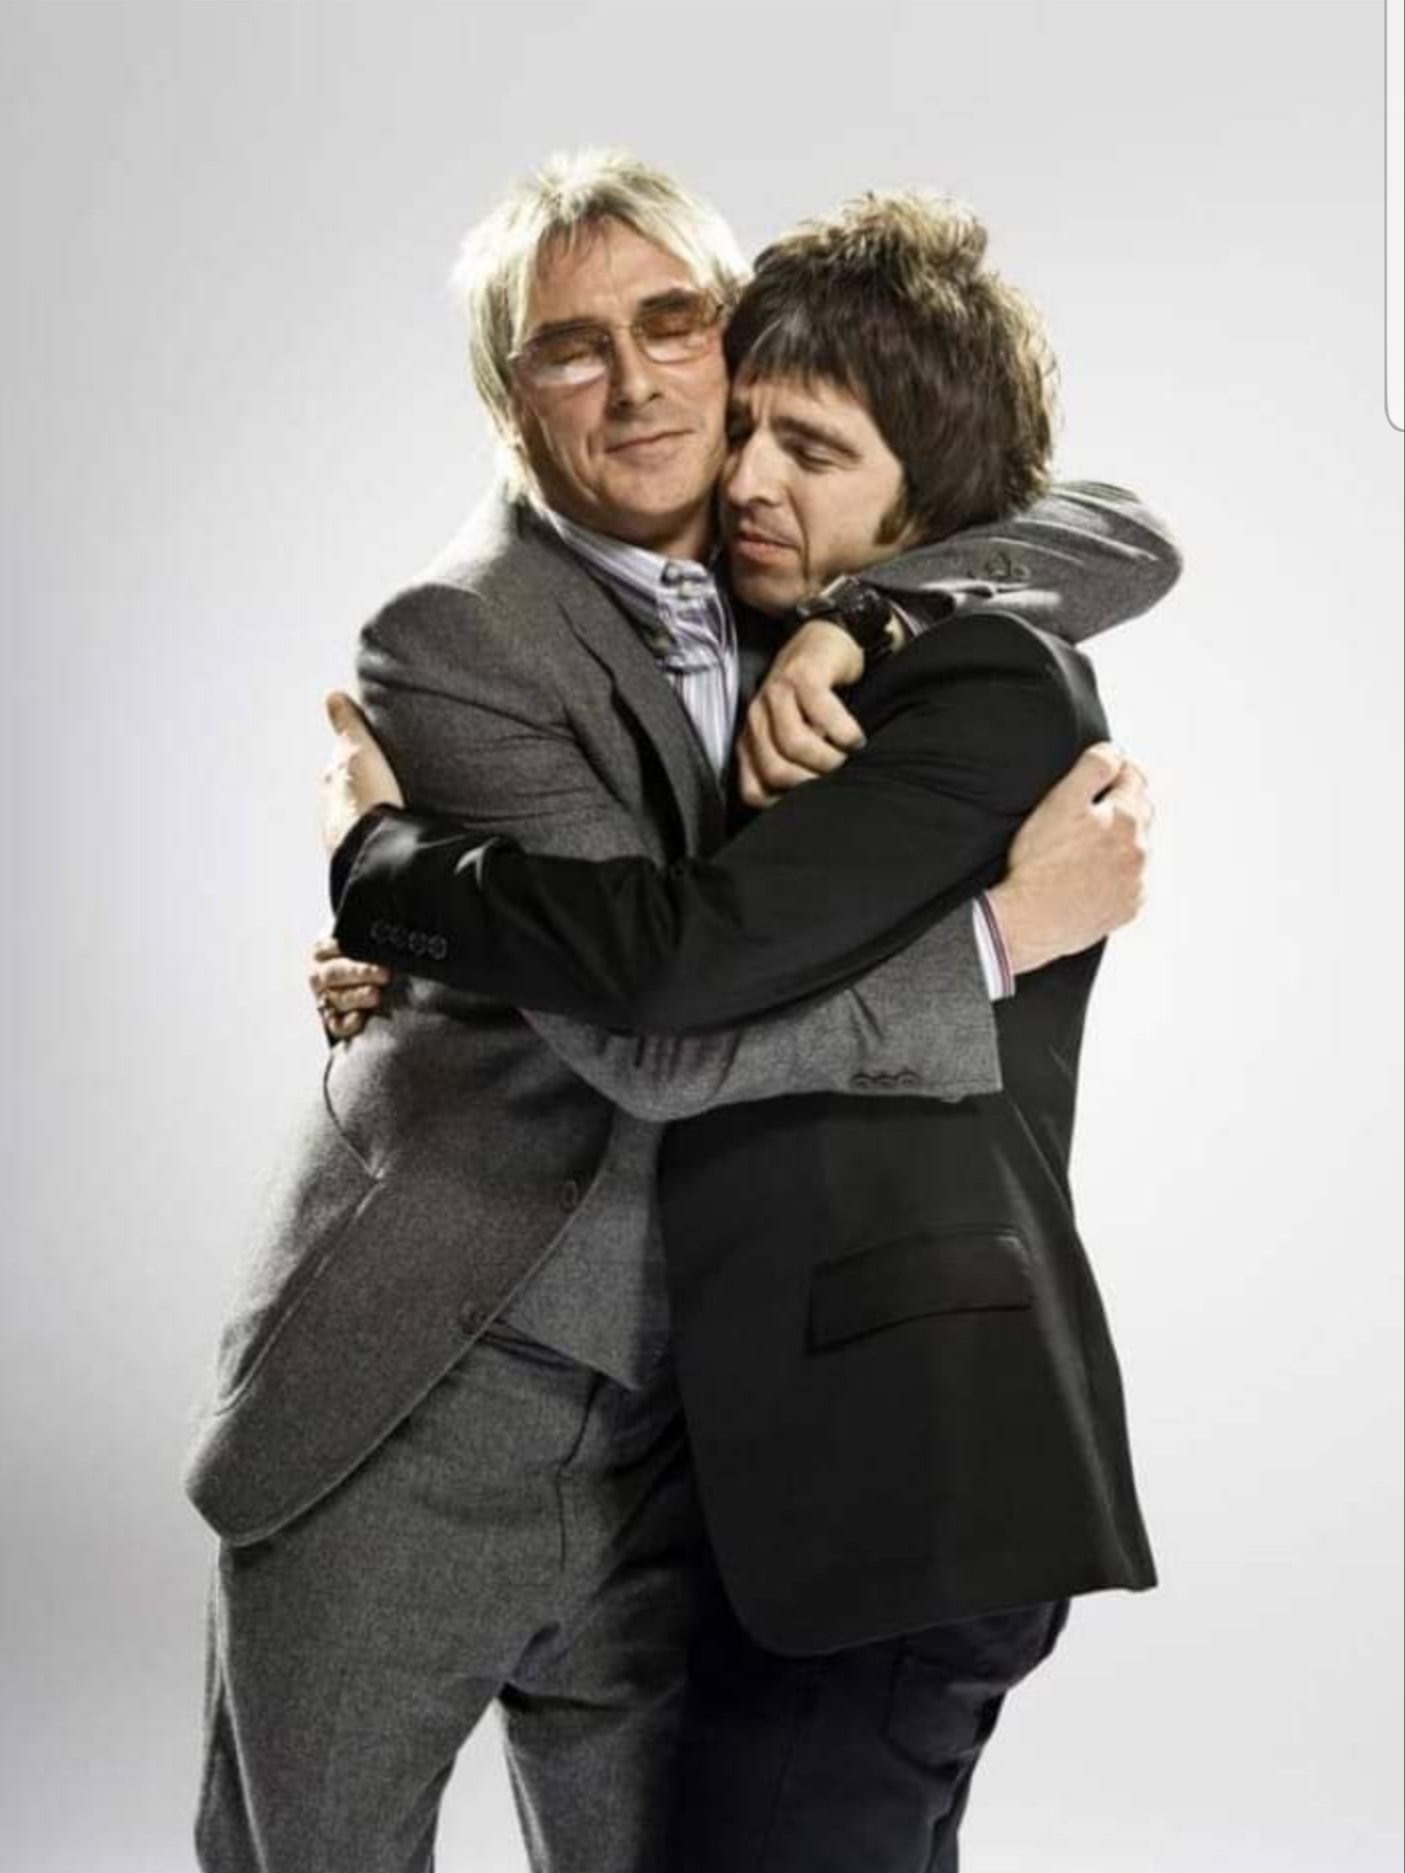 Happy 53rd birthday Noel Gallagher,love Paul  